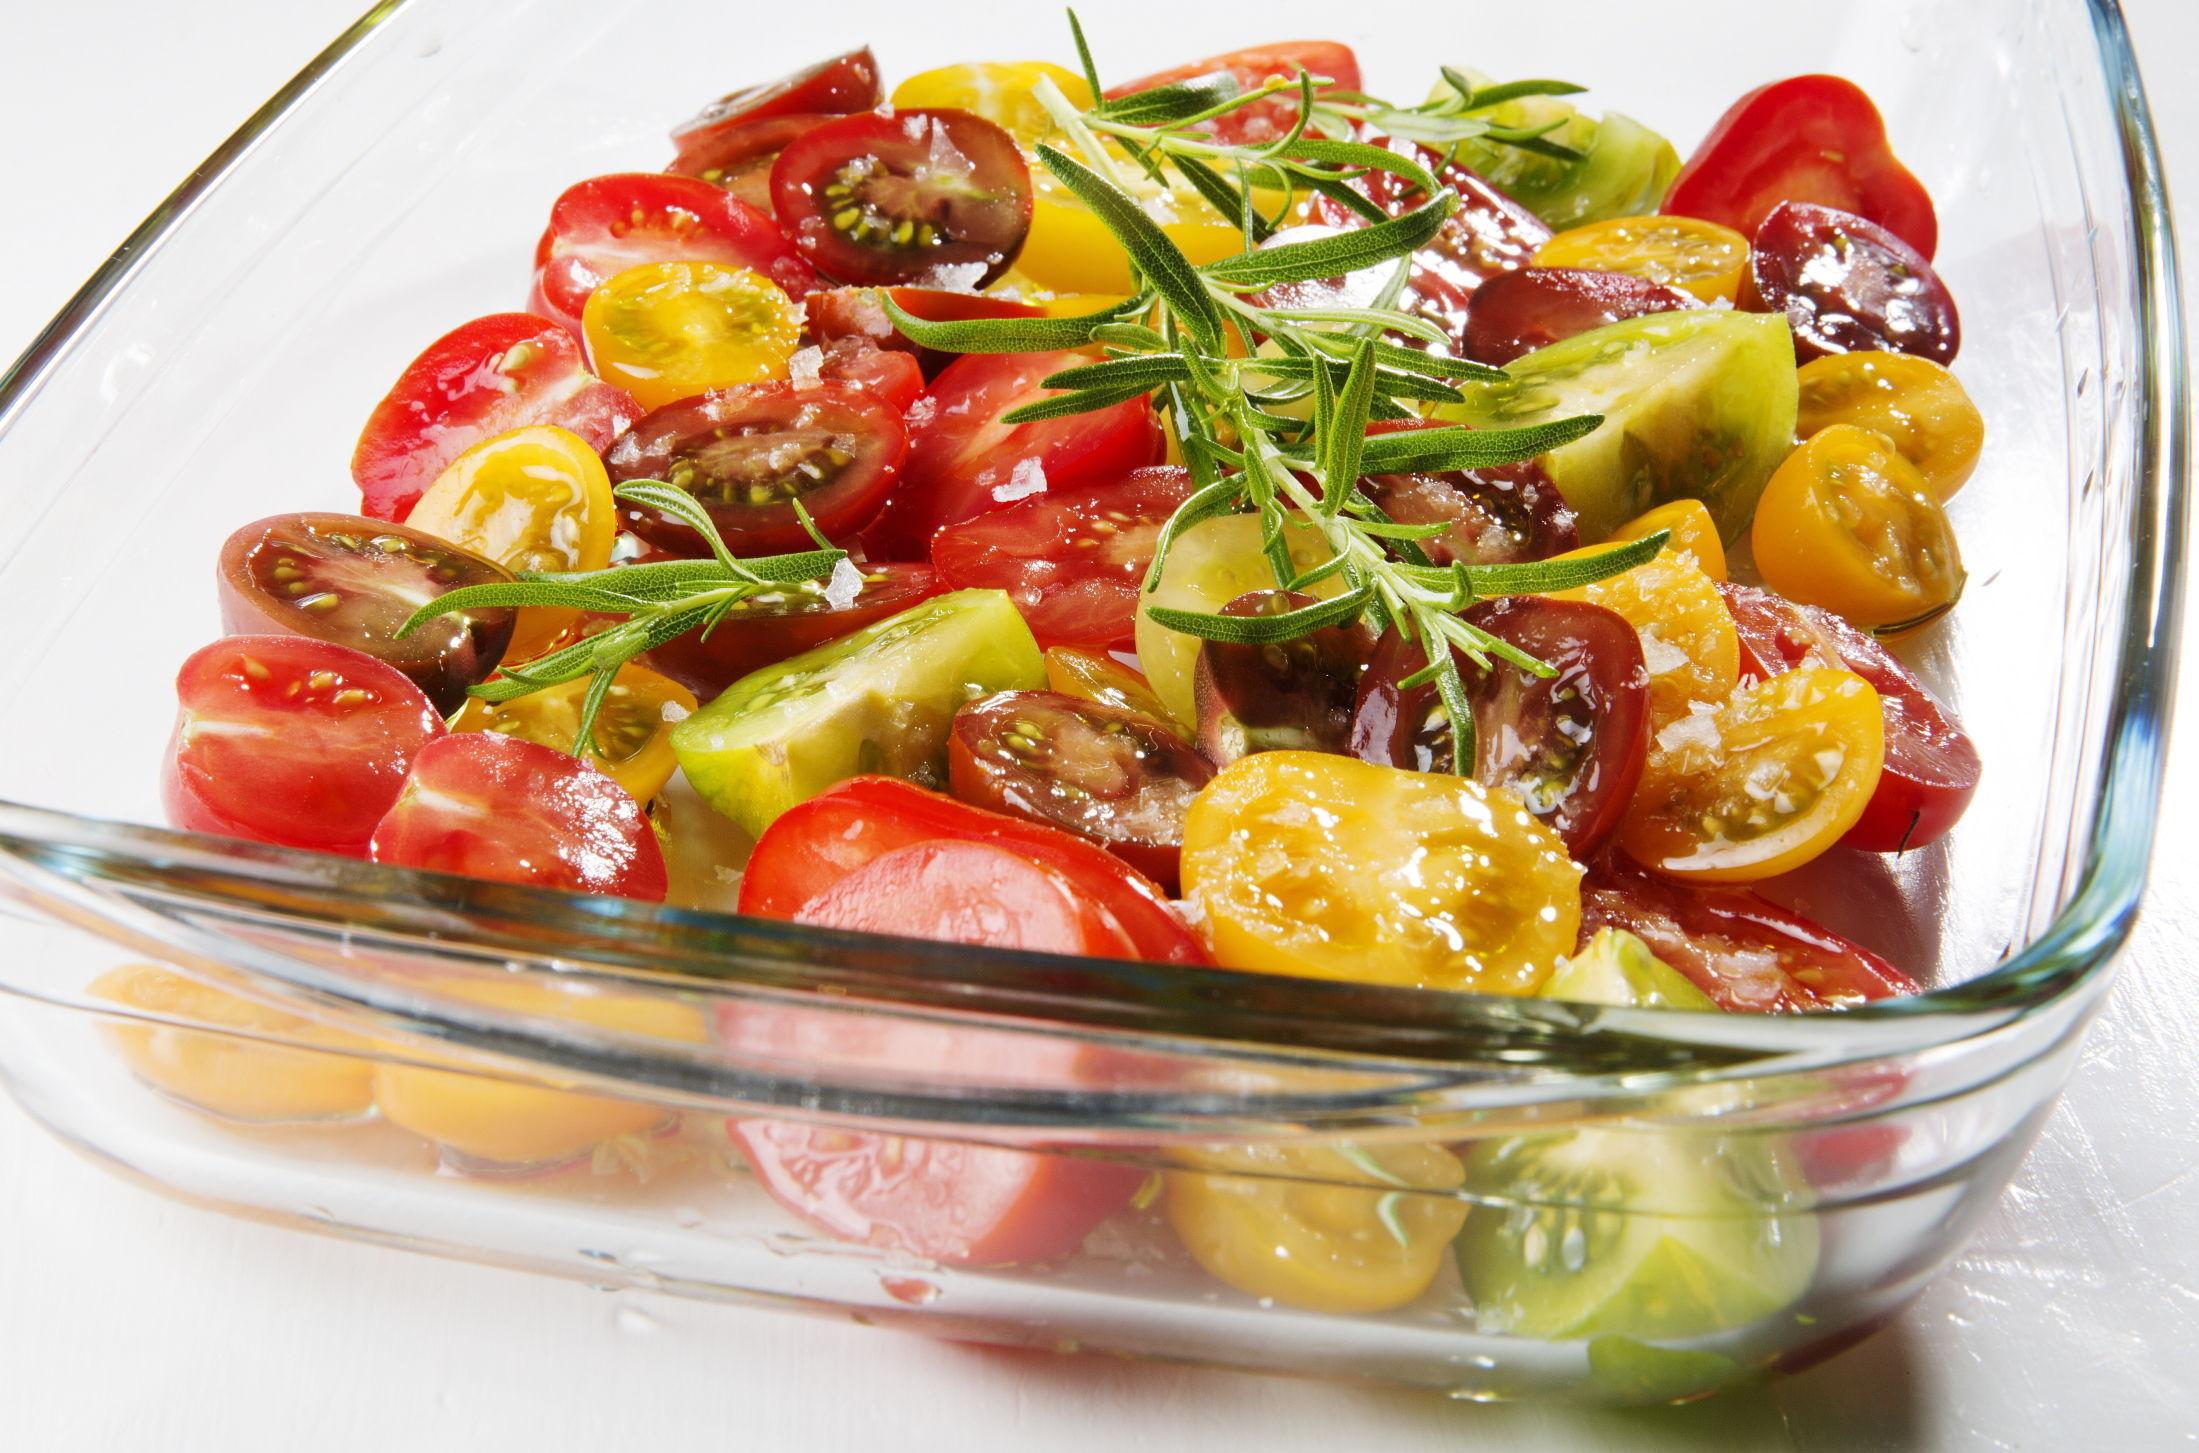 SØTT OG SUNT: Fargerike tomater i form med litt olje, urter og krydder over er enkelt, sunt og godt tilbehør. Foto: Magnar Kirknes/VG